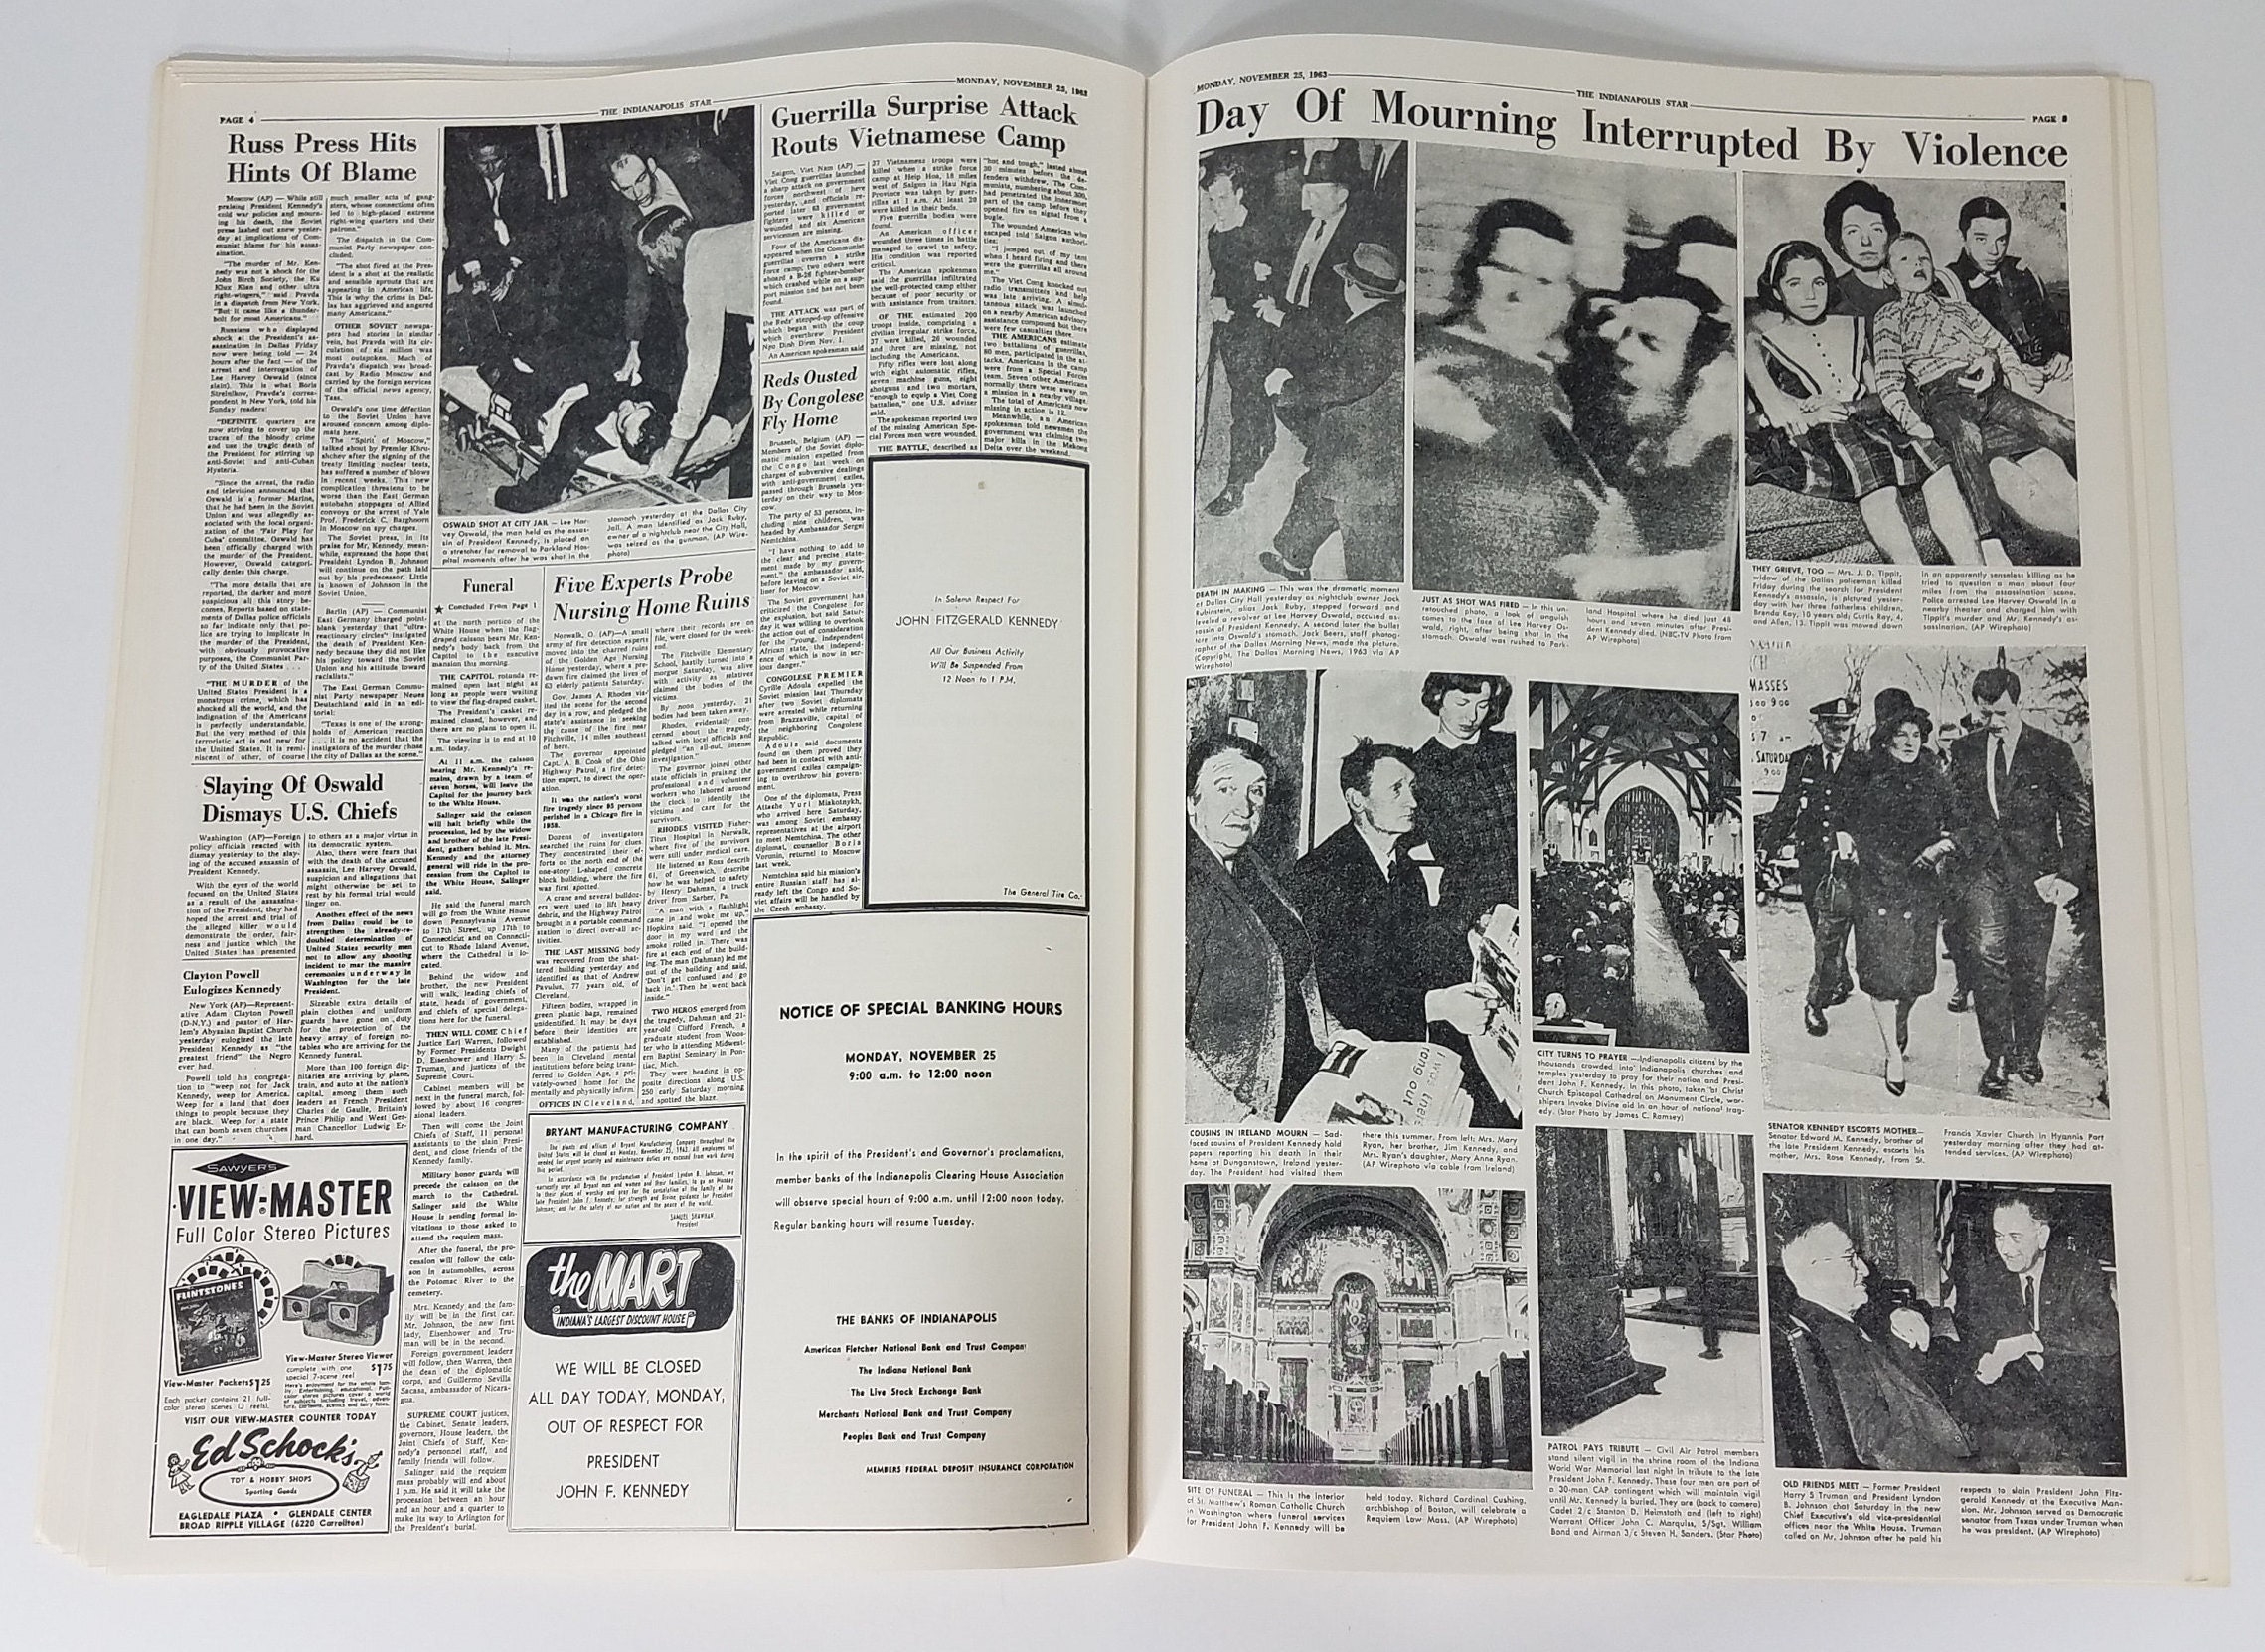 November 1963 Indianapolis Star Kennedy Assassination Articles - Etsy